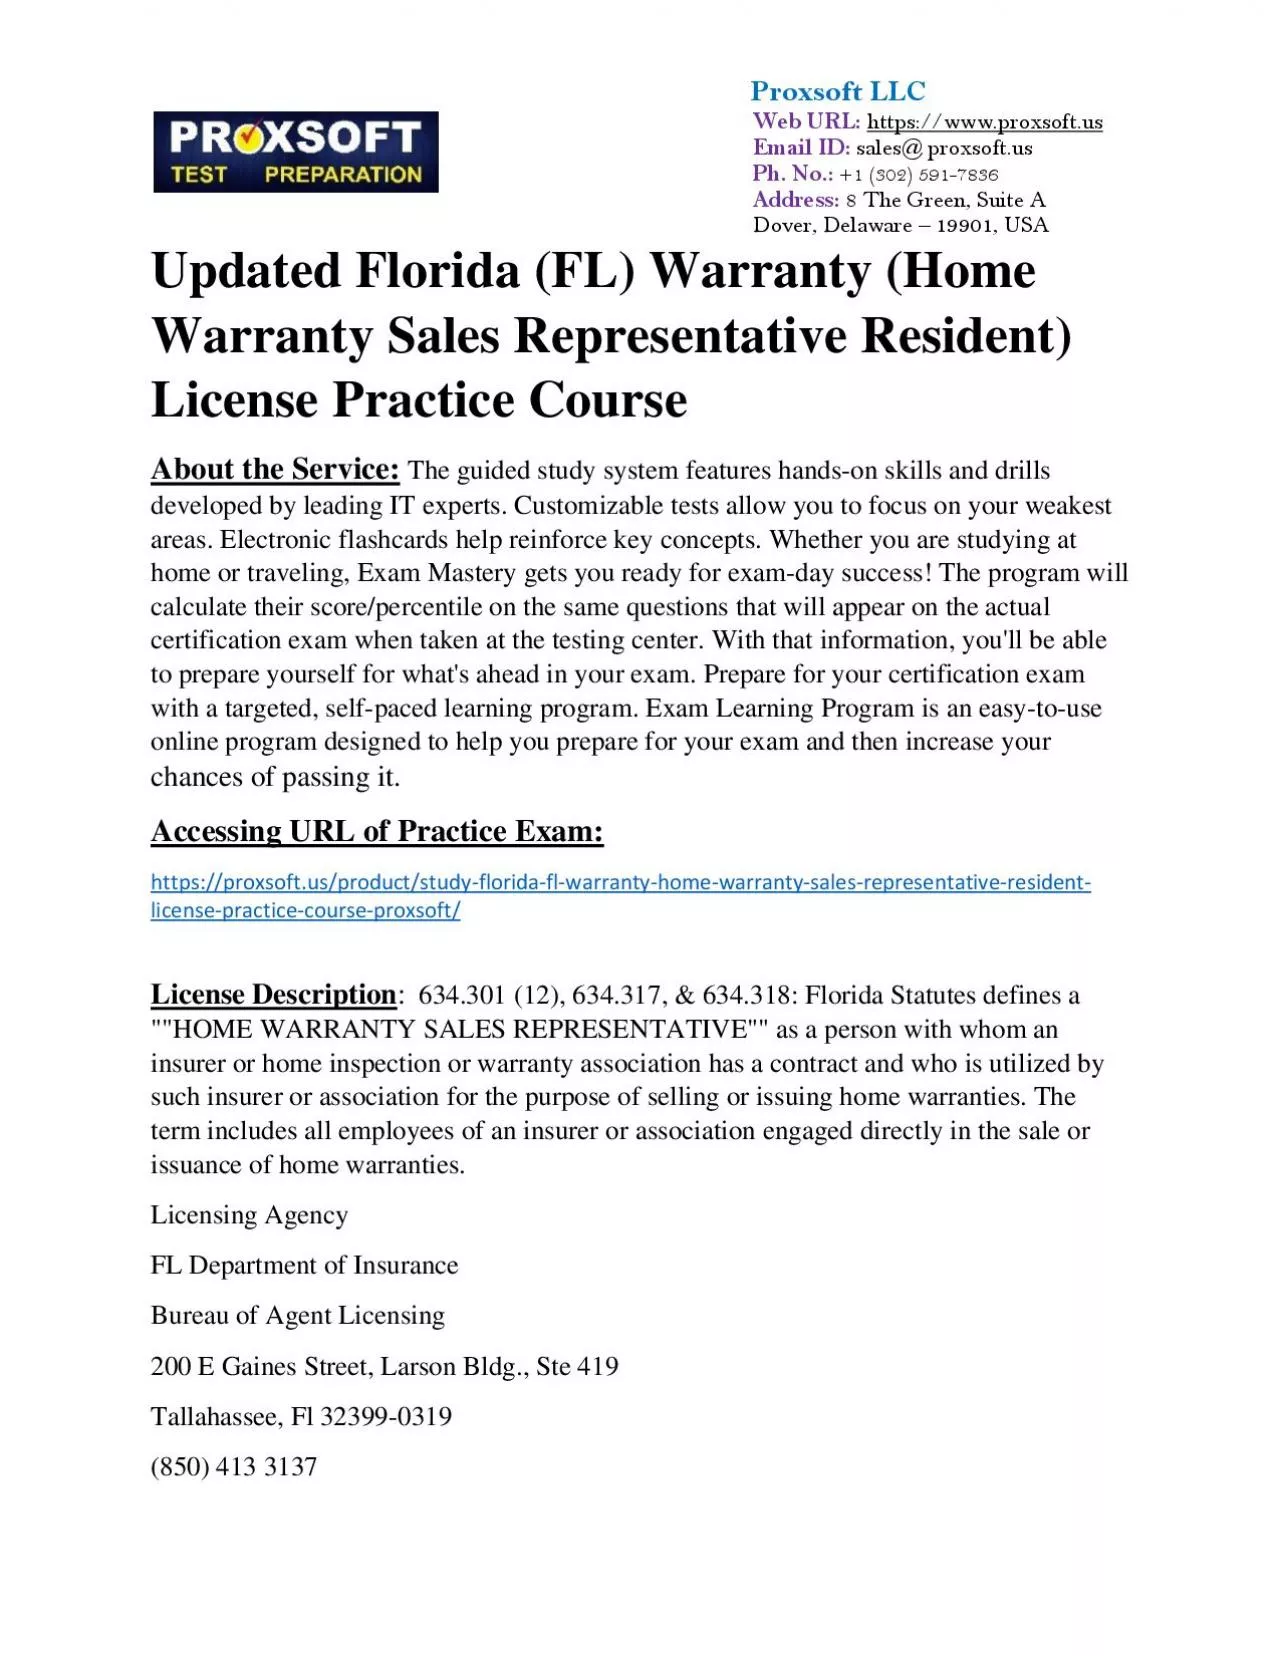 Updated Florida (FL) Warranty (Home Warranty Sales Representative Resident) License Practice